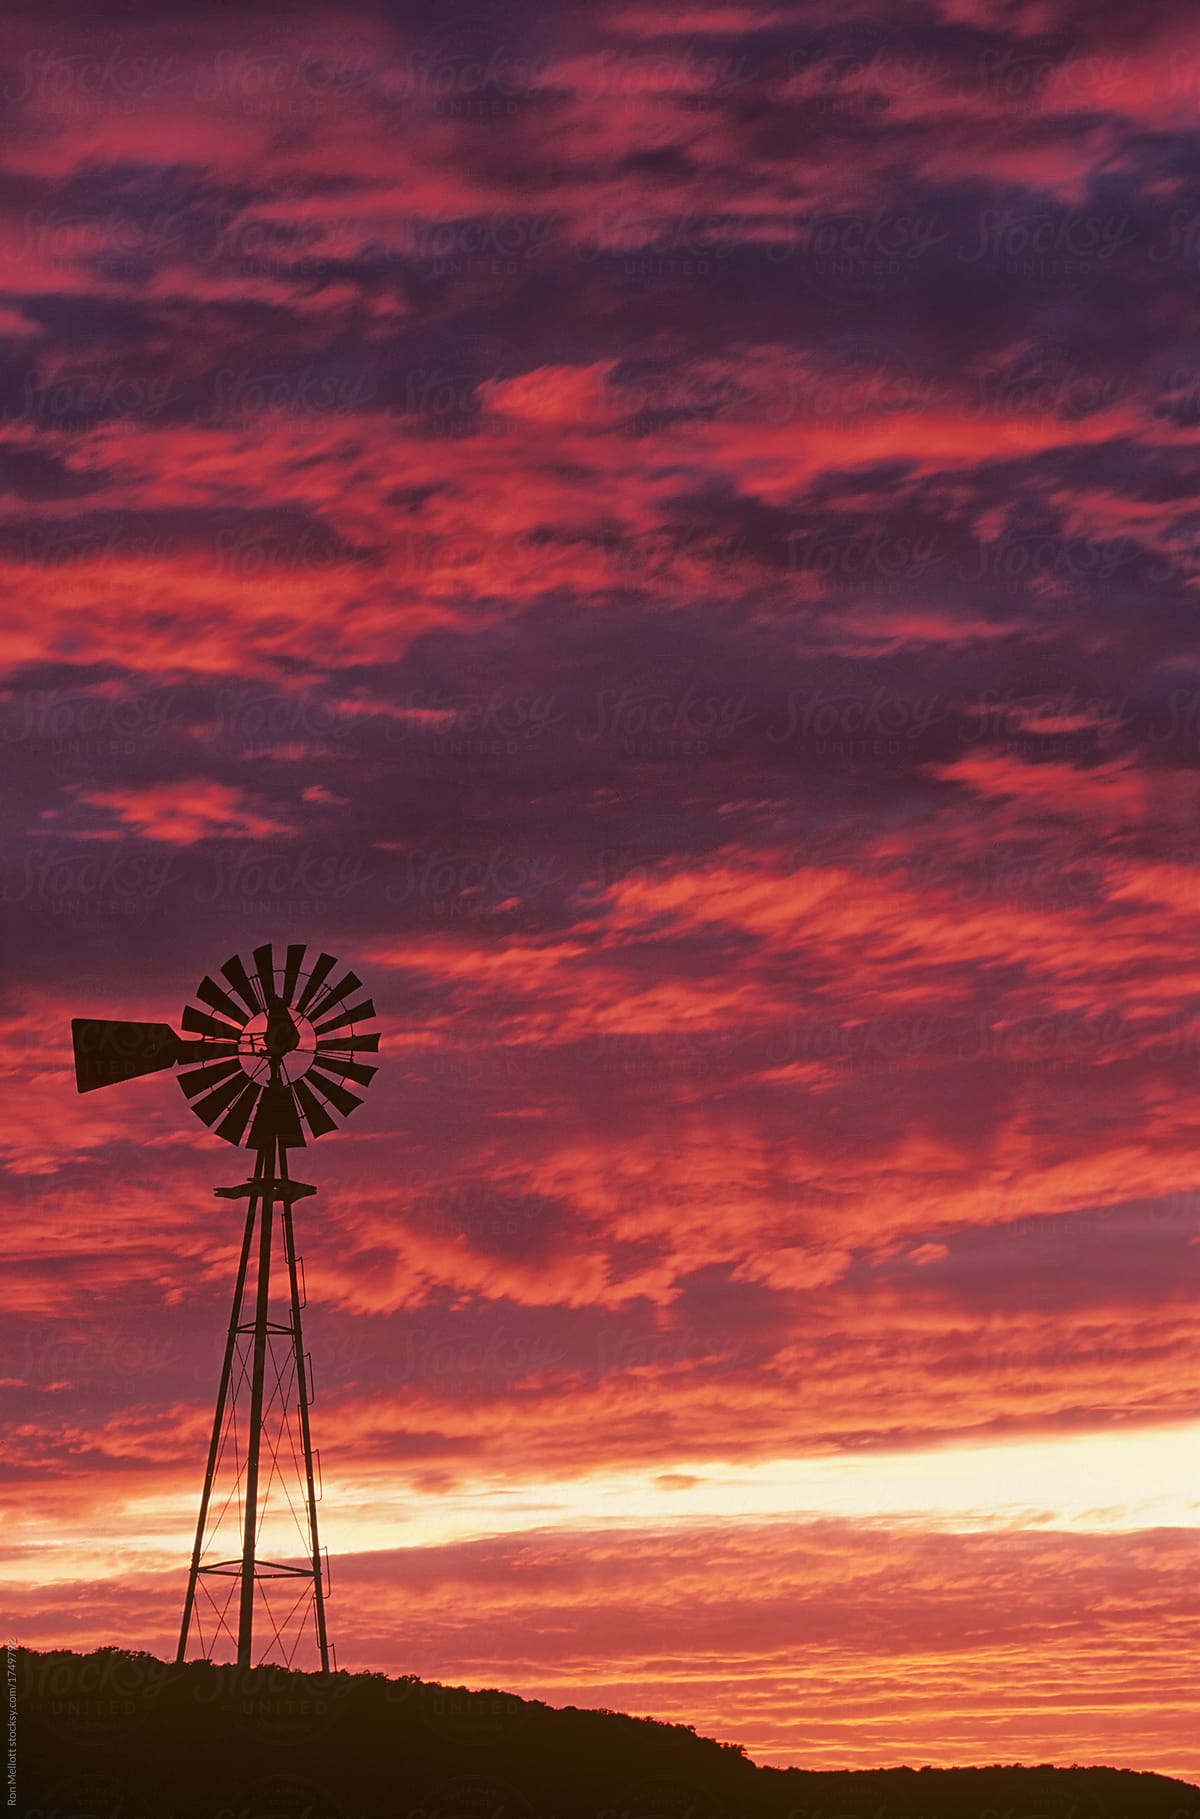 Windmill at sunset on the prairie province of Saskatchewan